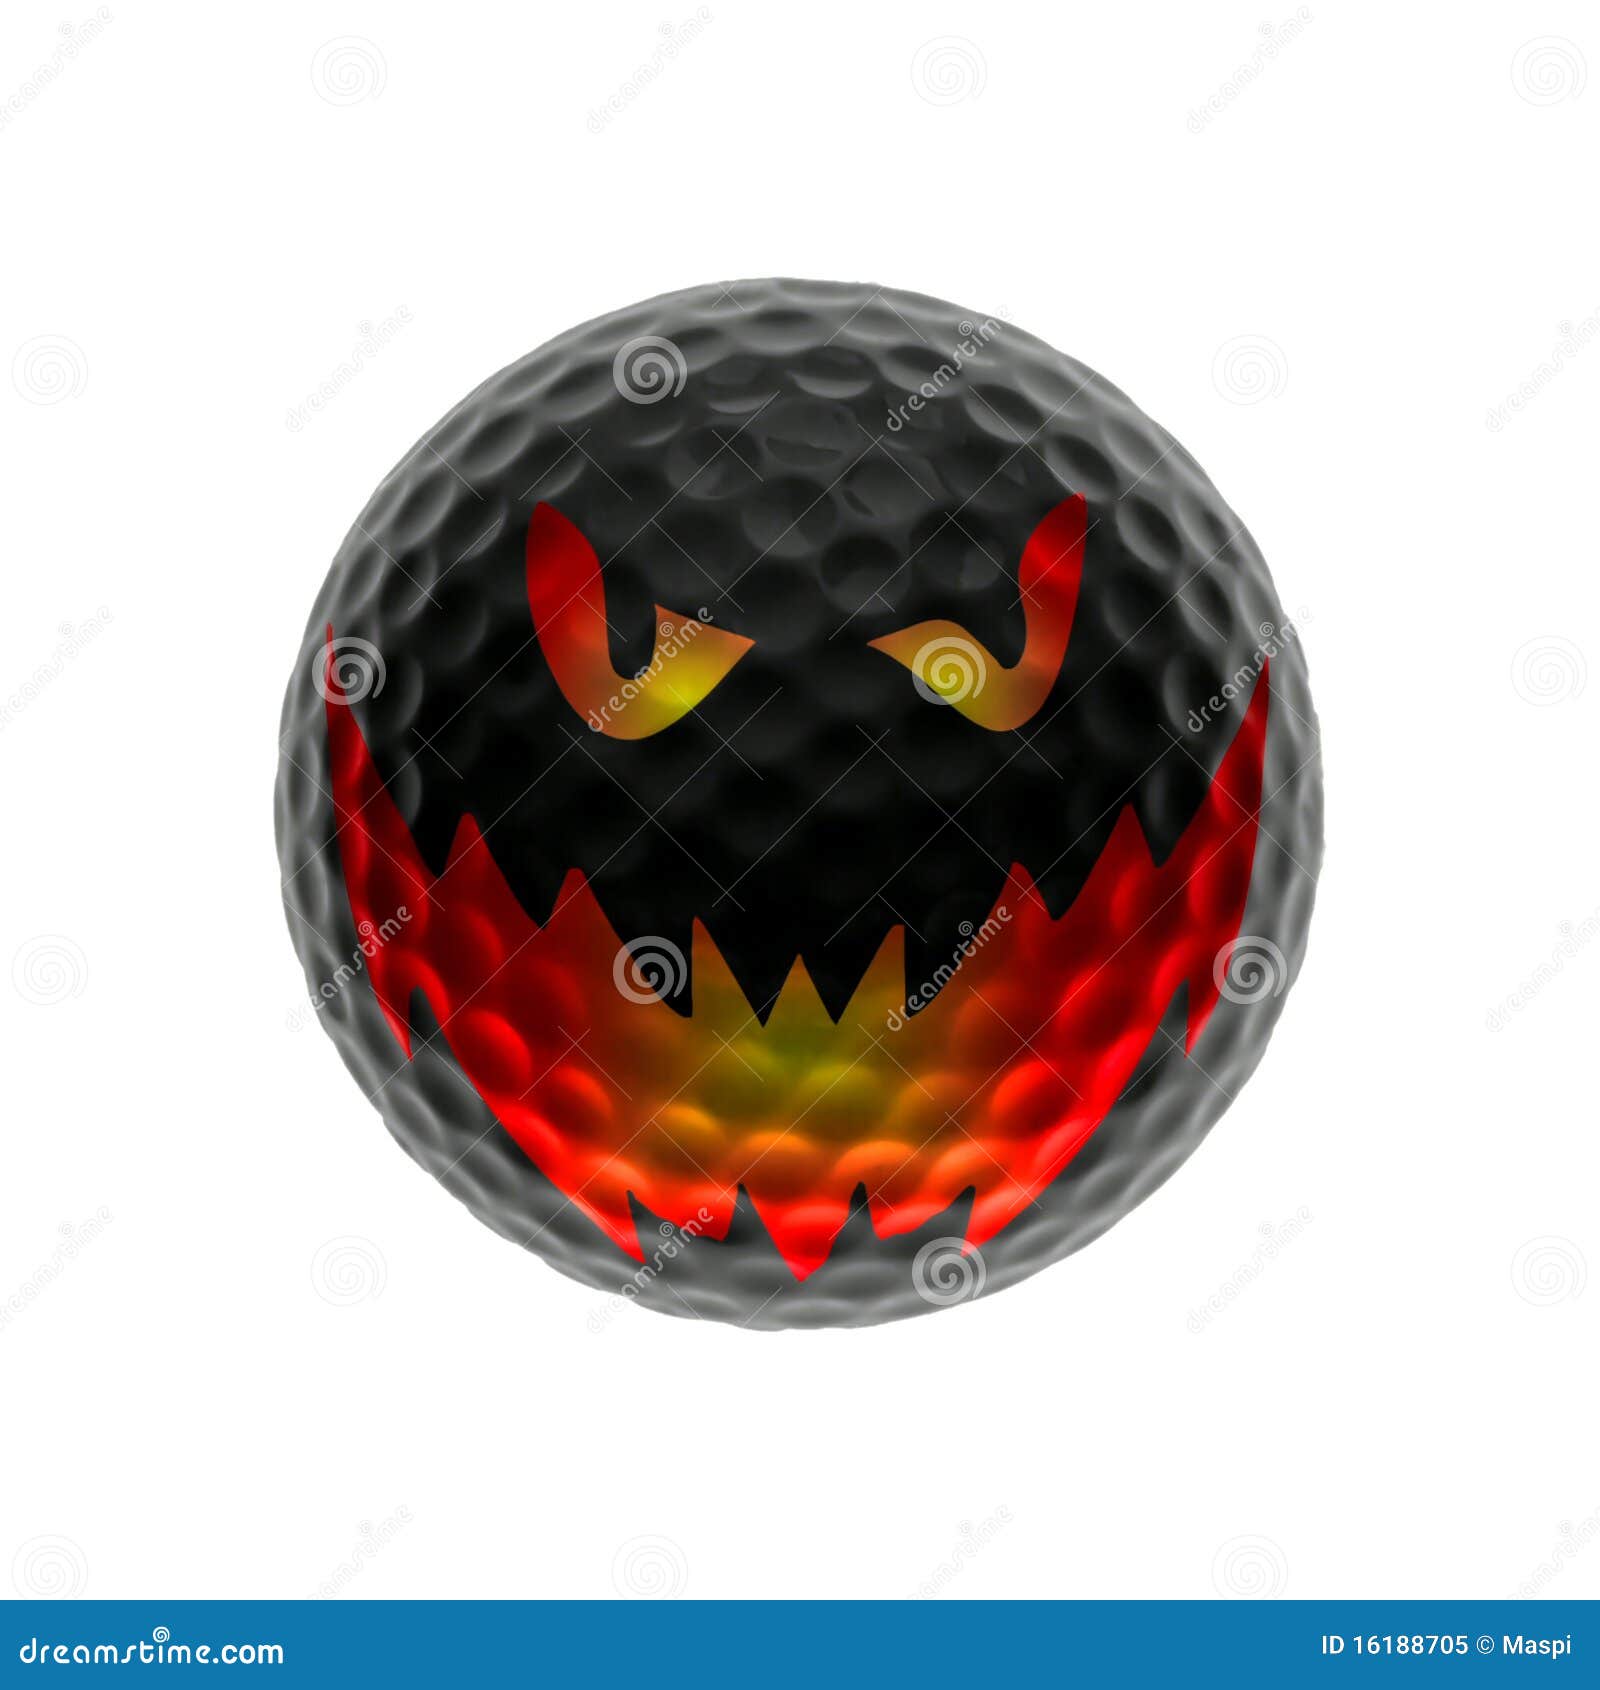 evil-golf-ball-16188705.jpg